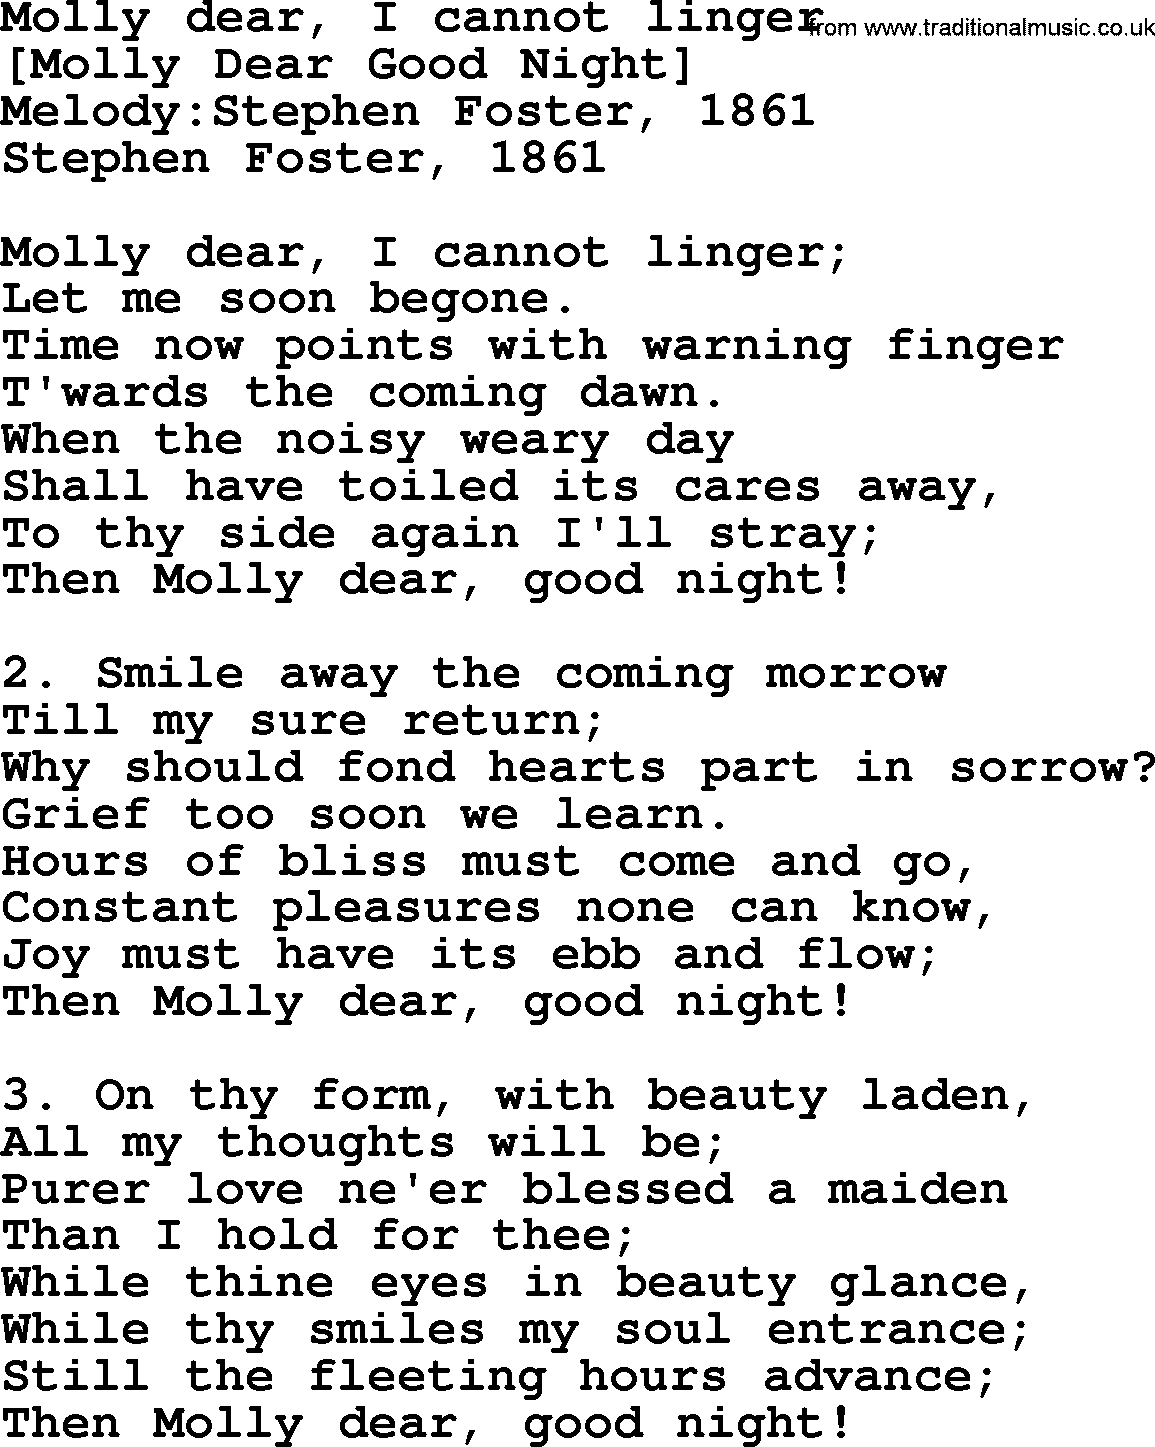 Old American Song: Molly Dear, I Cannot Linger, lyrics